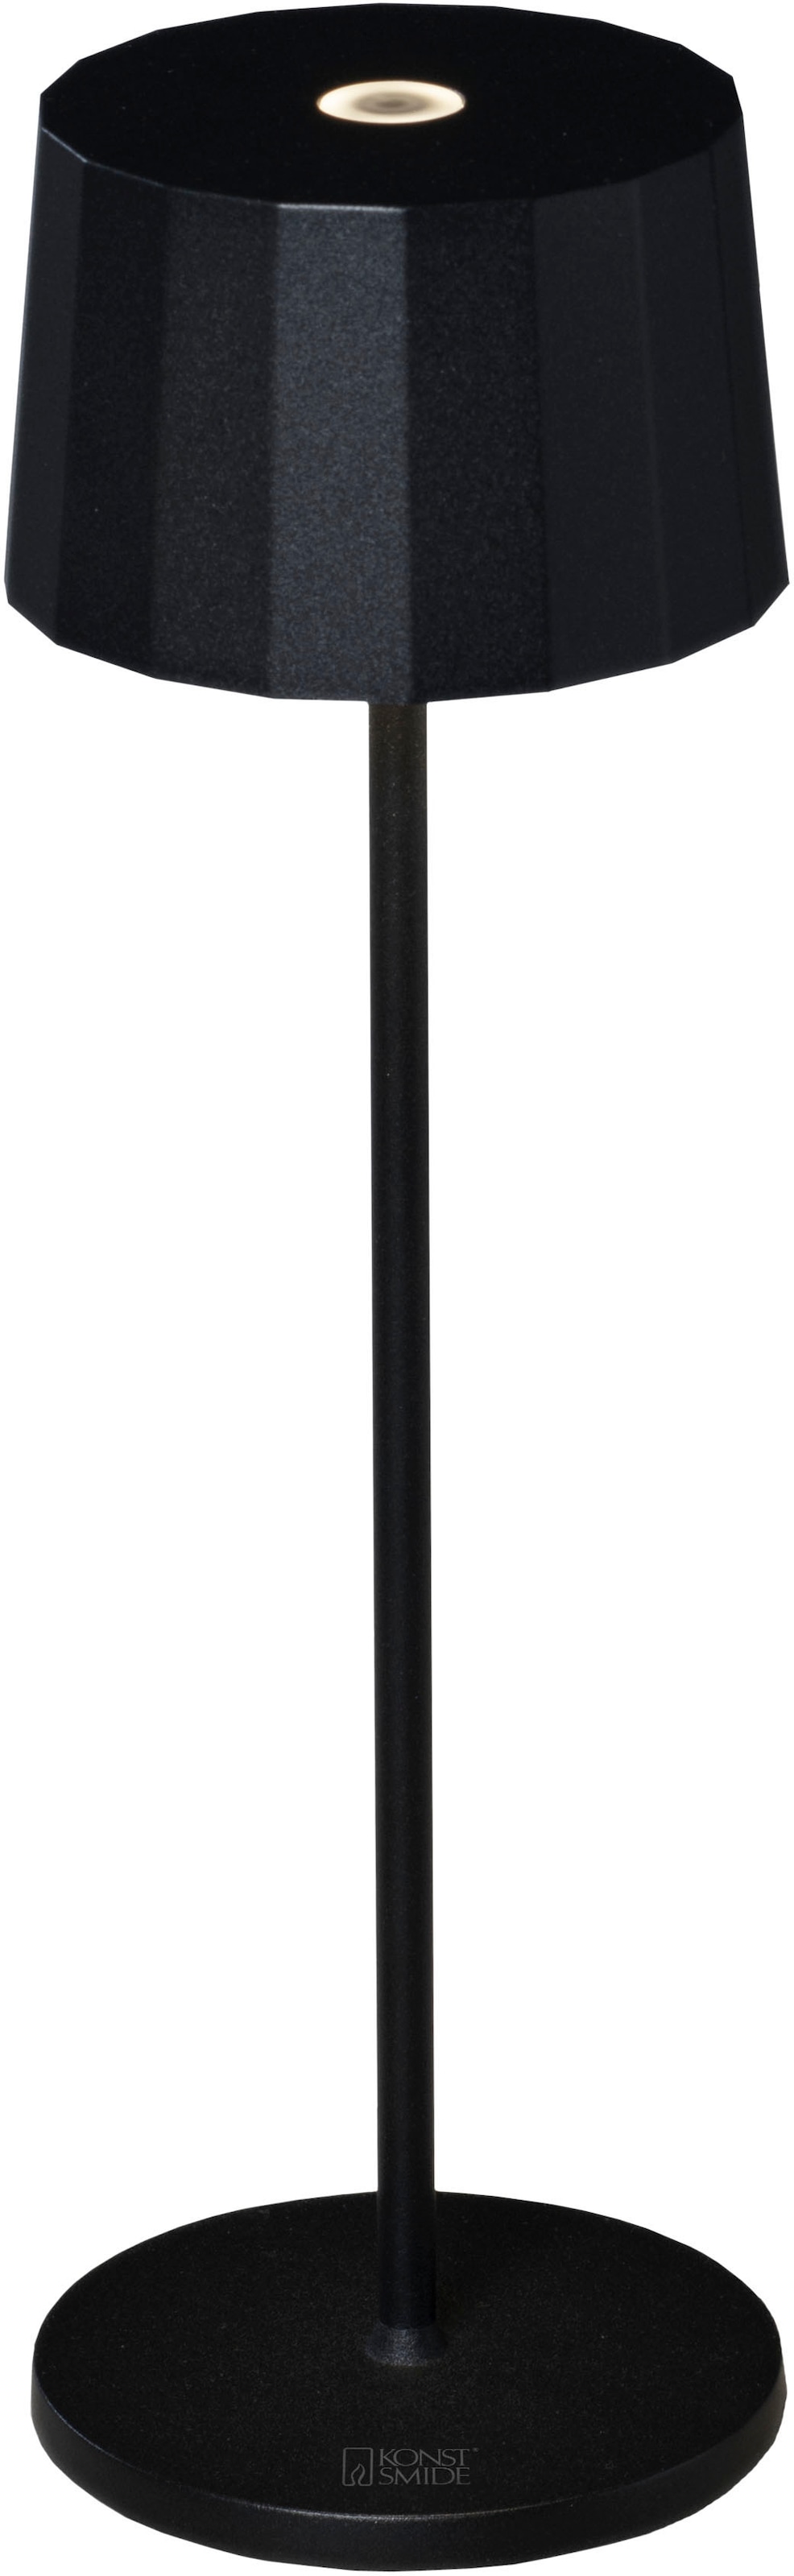 KONSTSMIDE LED Tischleuchte »Positano«, schwarz, Farbtemperatur, Positano dimm USB-Tischleuchte | LED BAUR